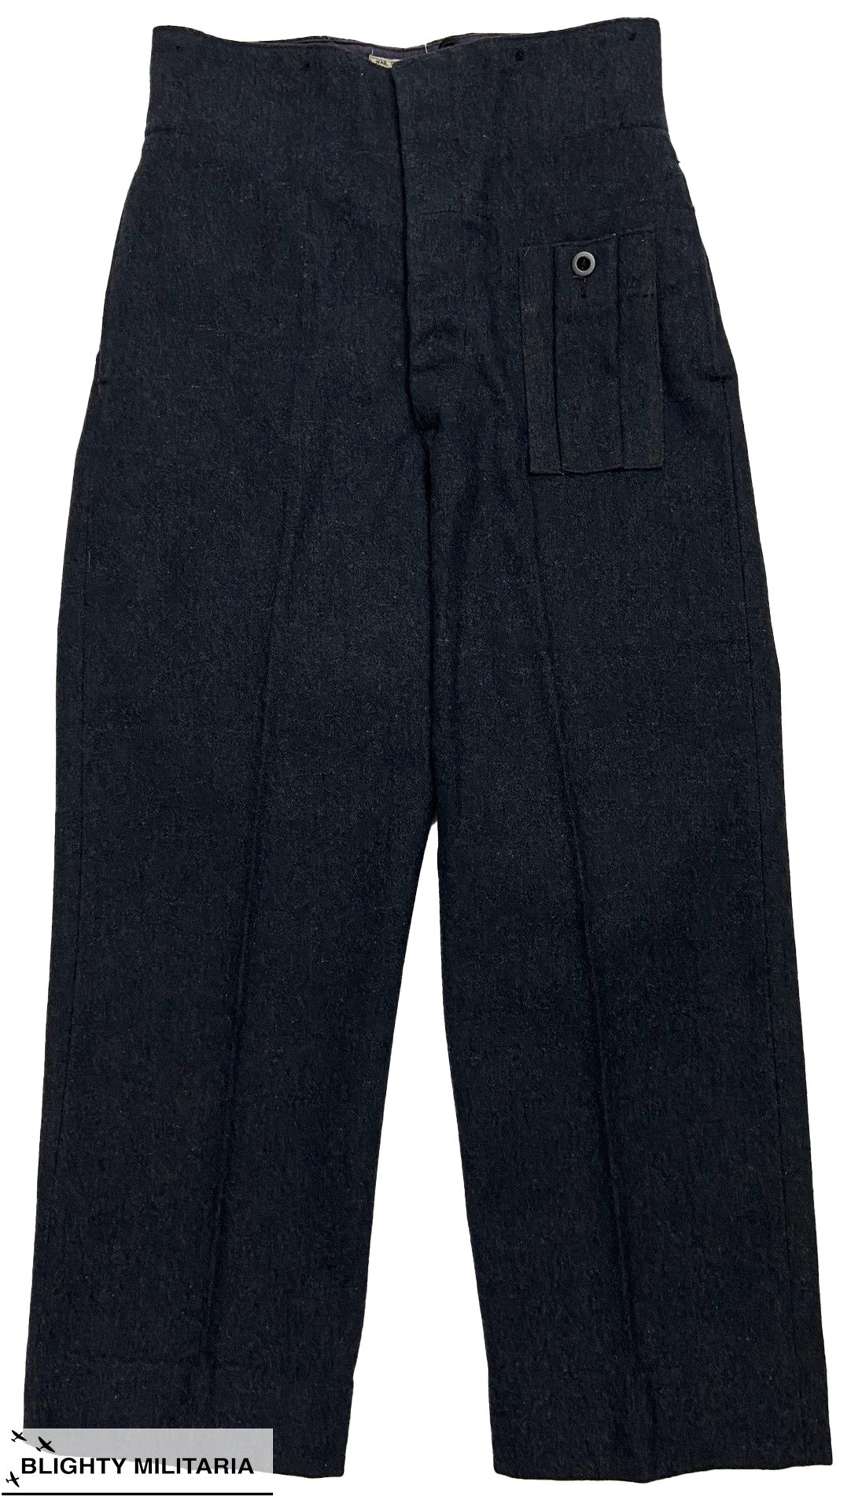 Original 1944 Dated RAF War Service Dress Trousers - Size 7